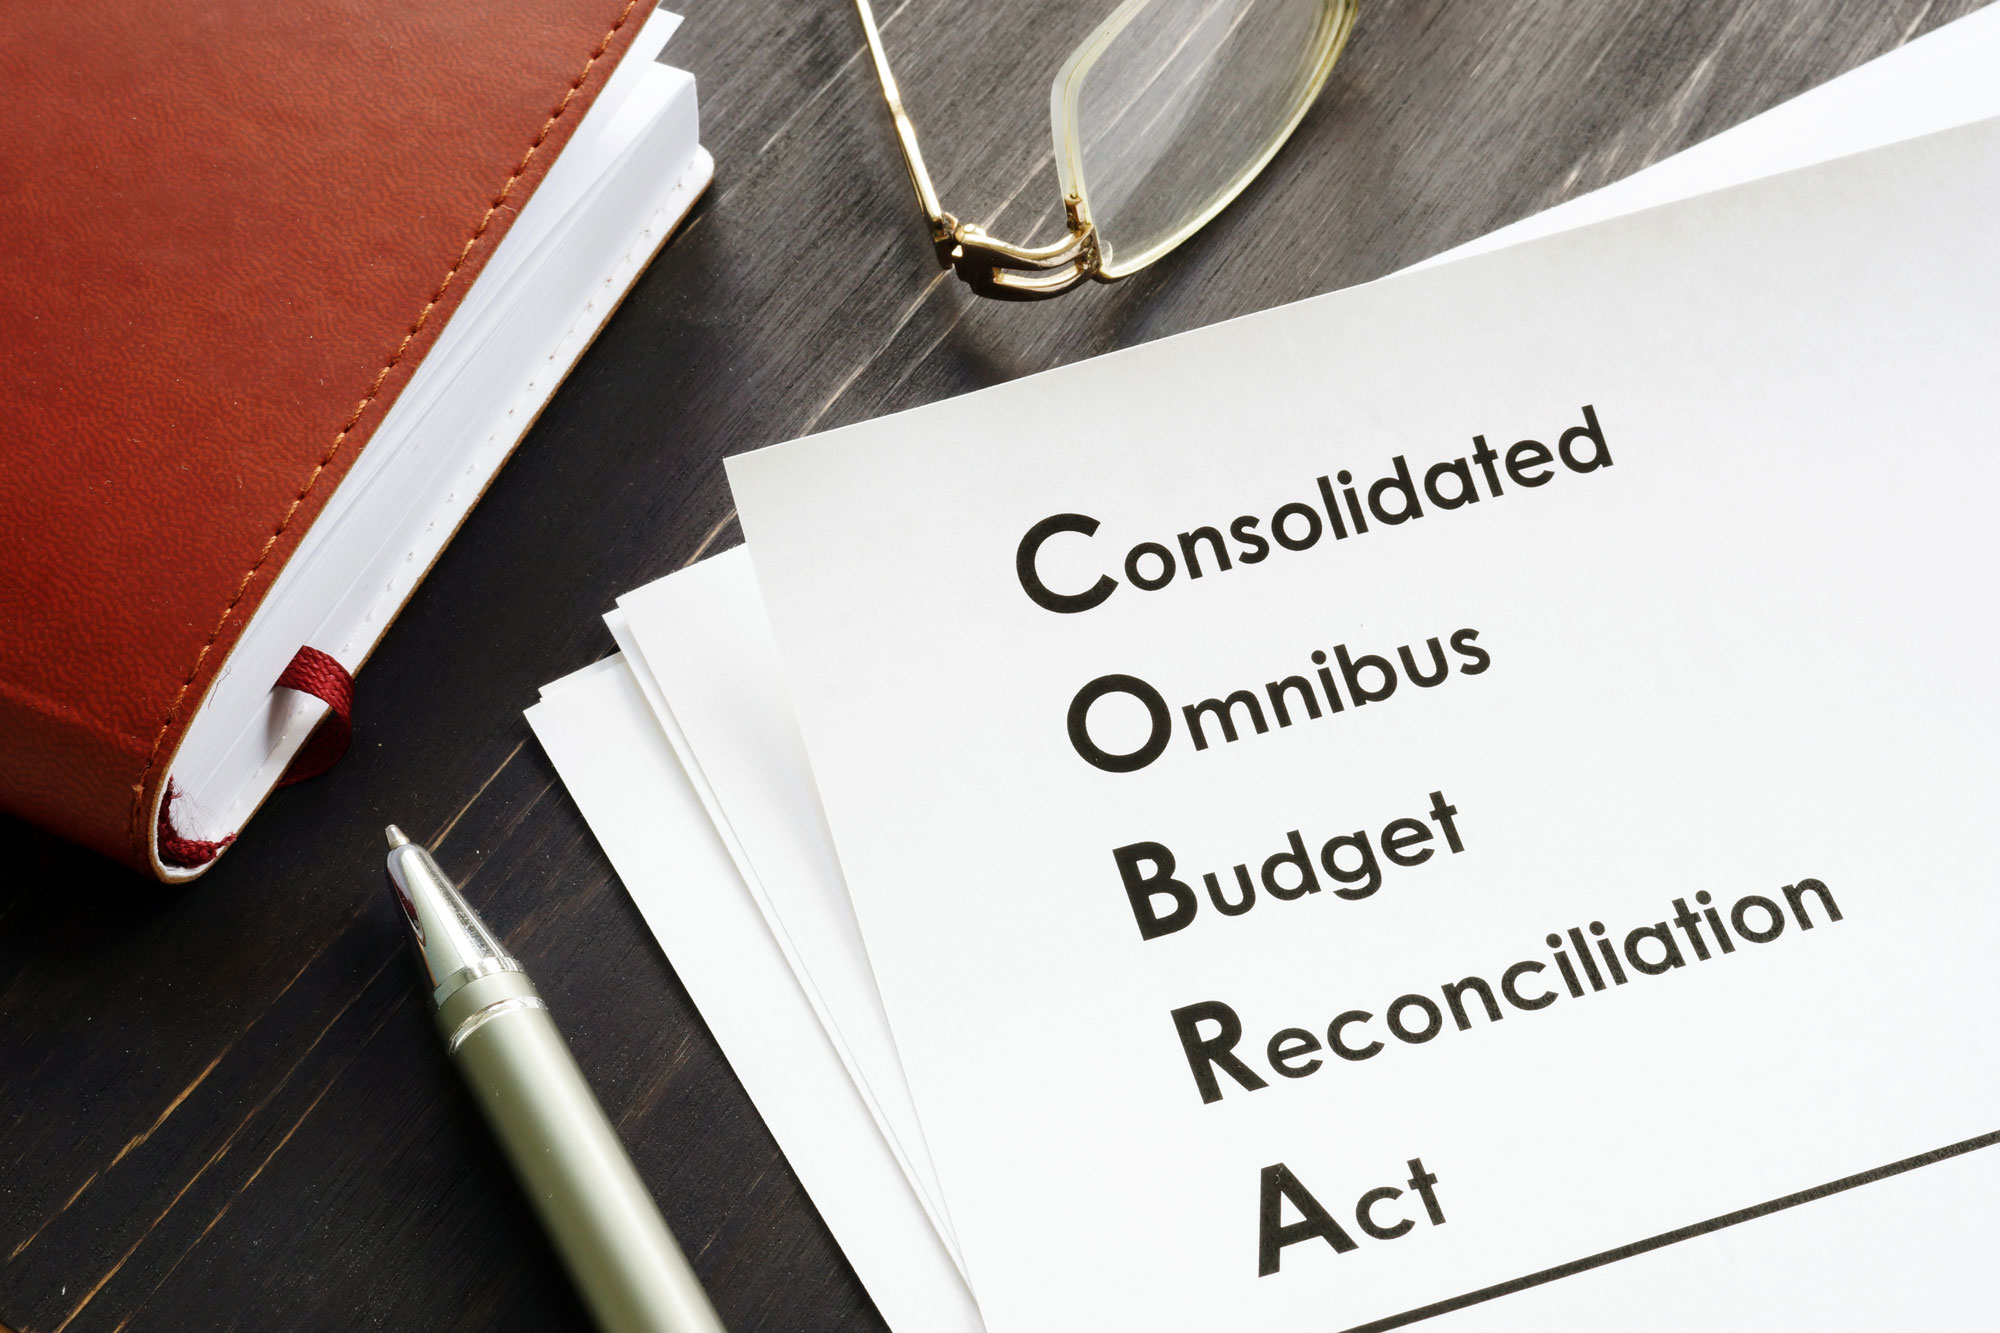 consolidated omnibus budget reconciliation act